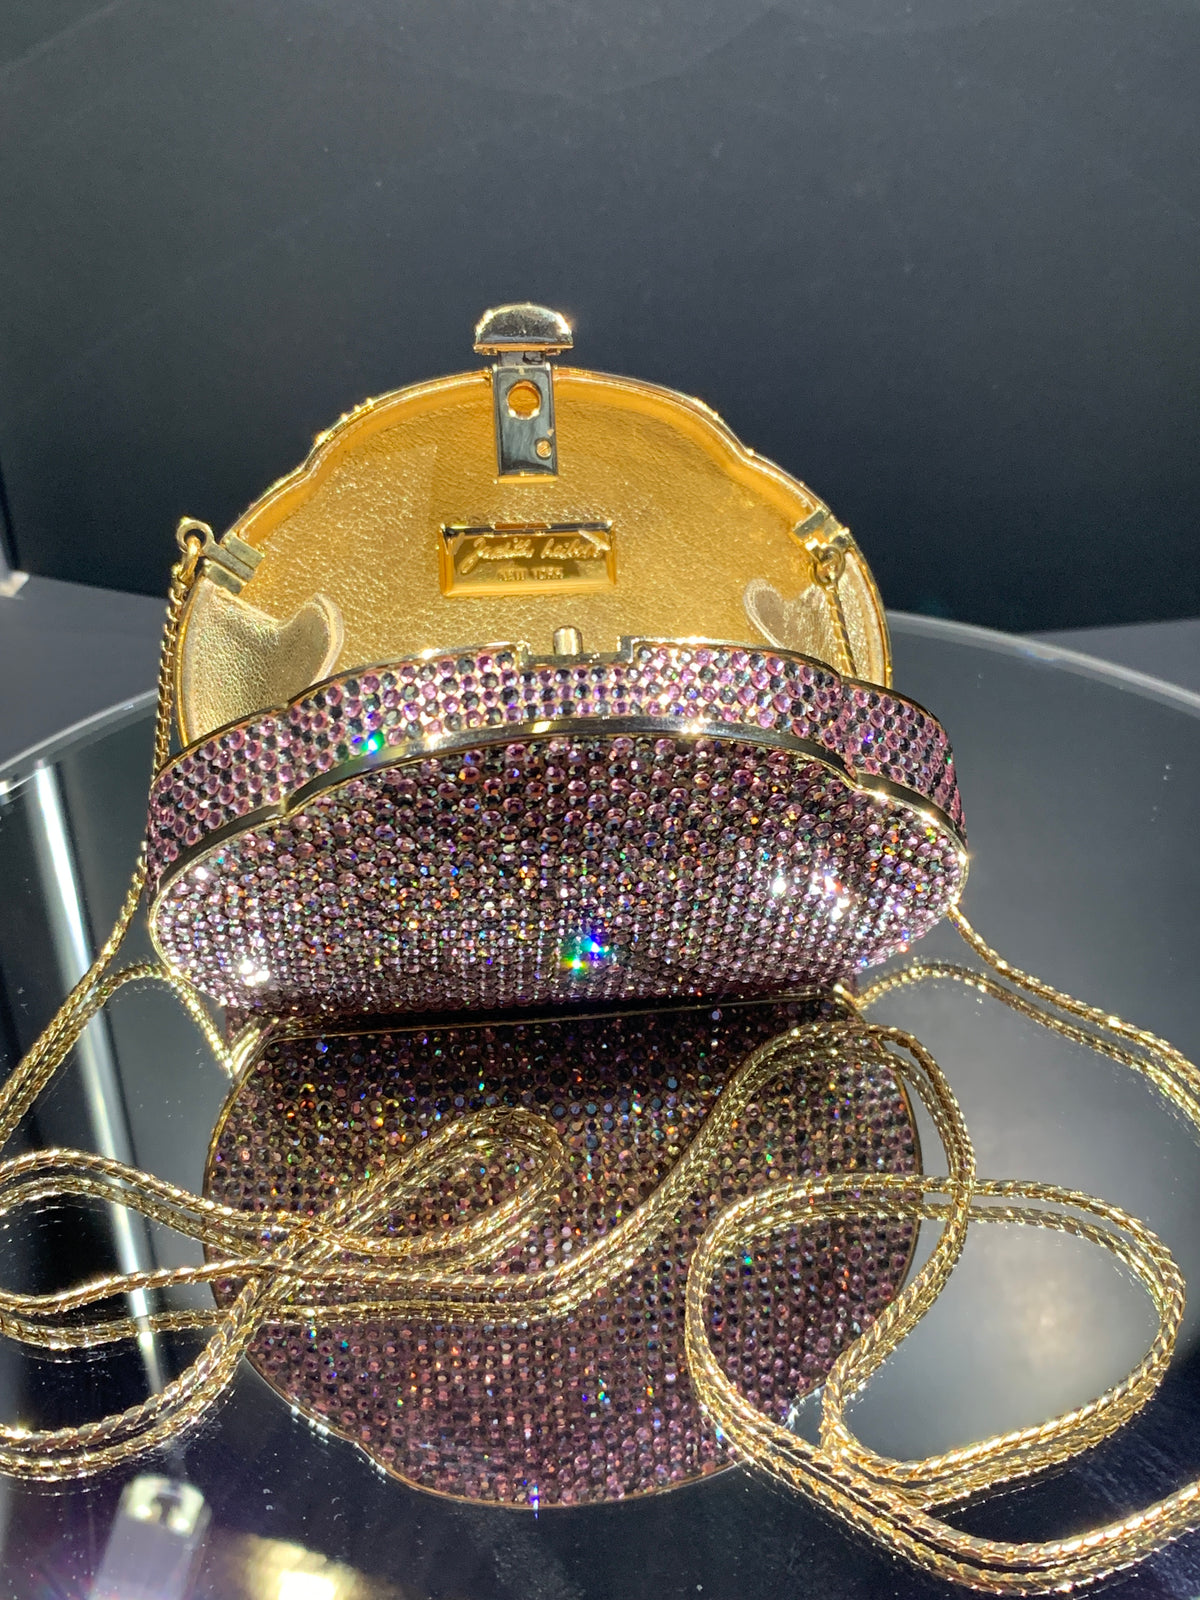 Pink and Silver Crystal Minaudiere Handbag by Judith Leiber